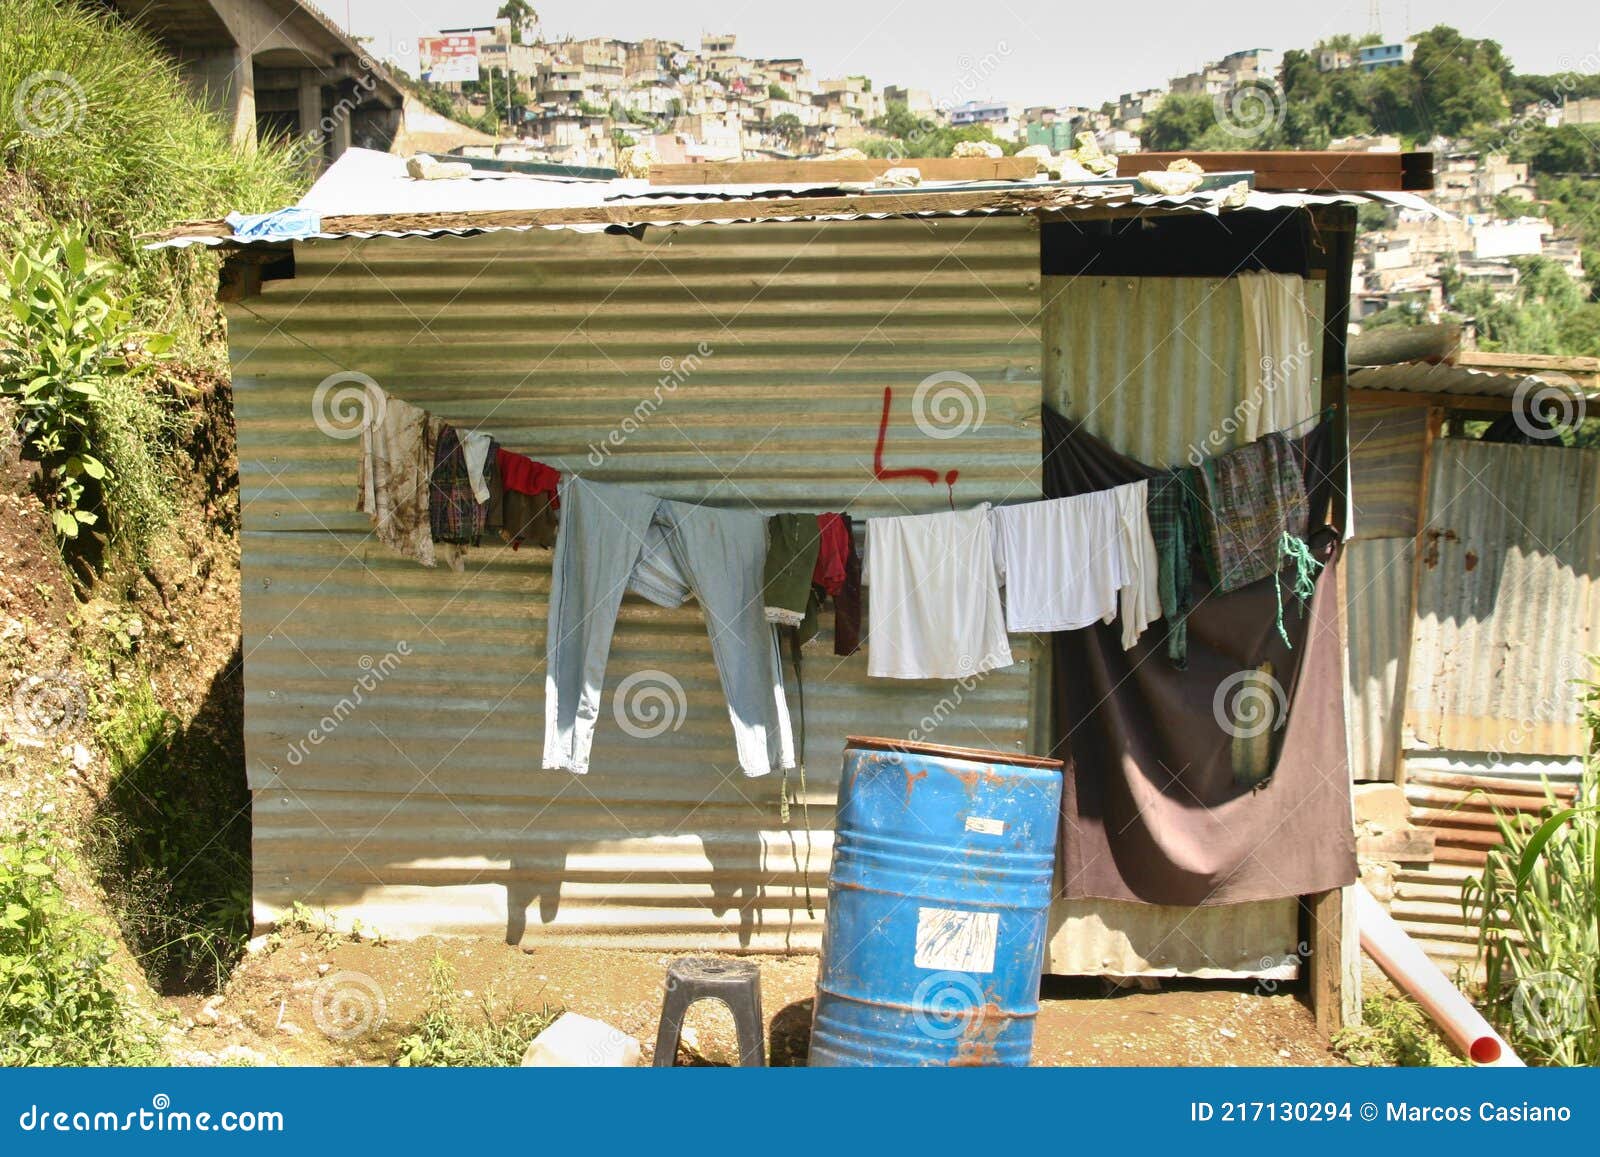 the poor homes  near the incienso bridge in guatemala city.